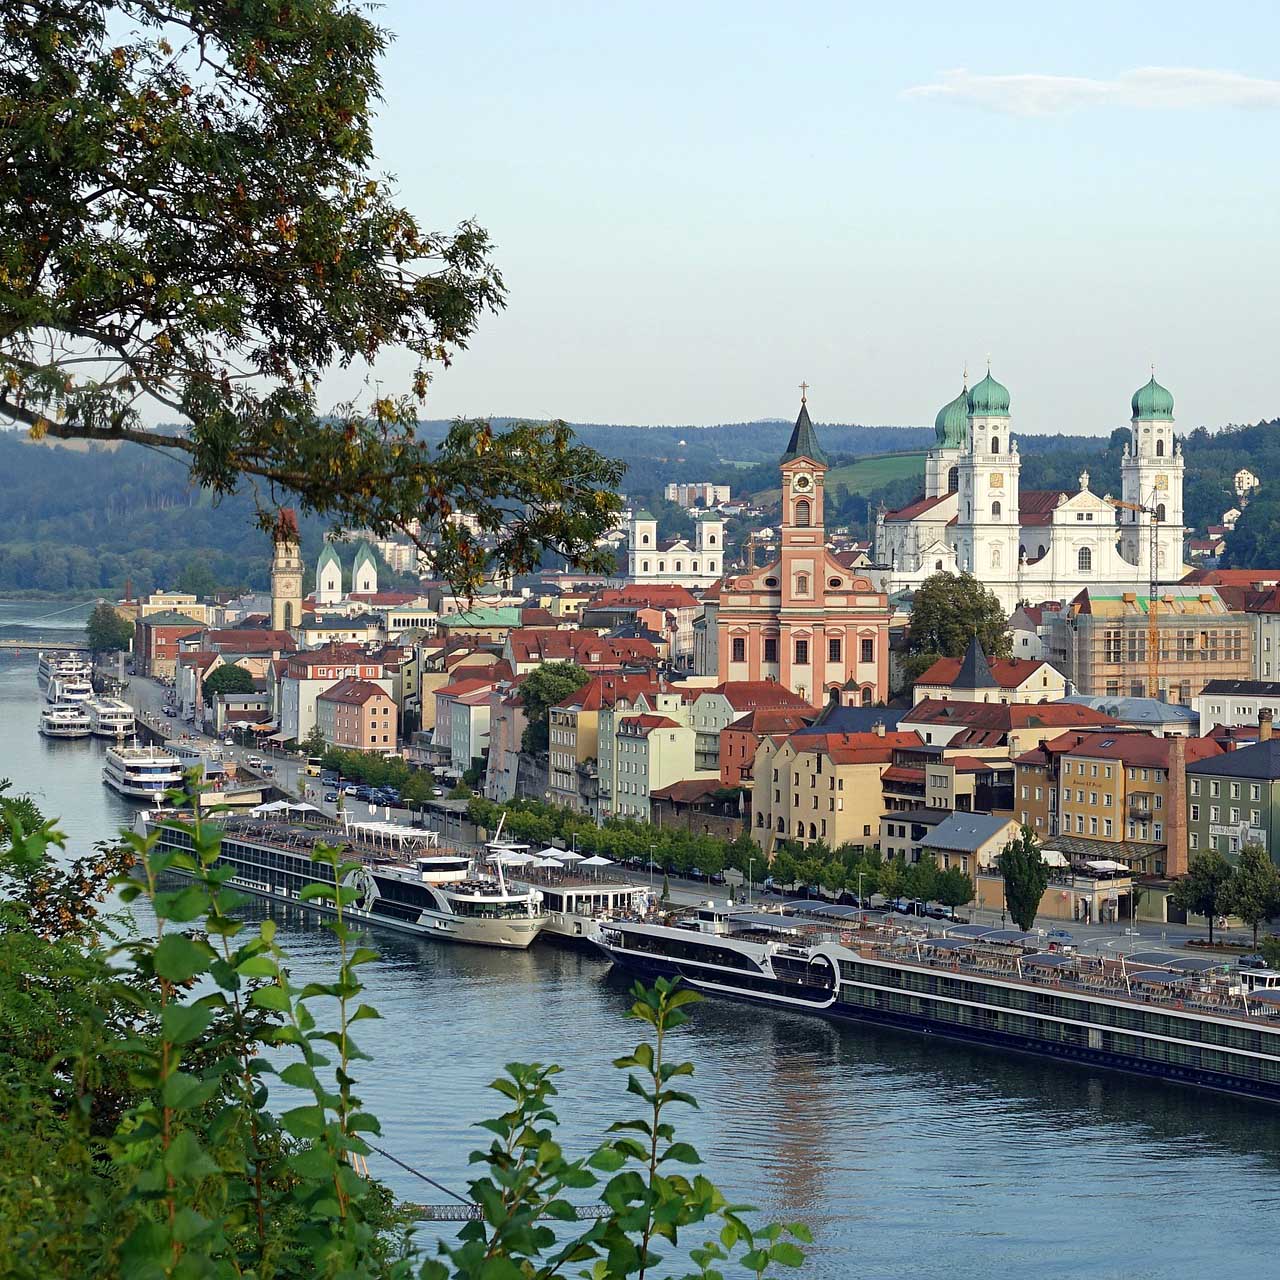 Passau (c) www.pixabay.com